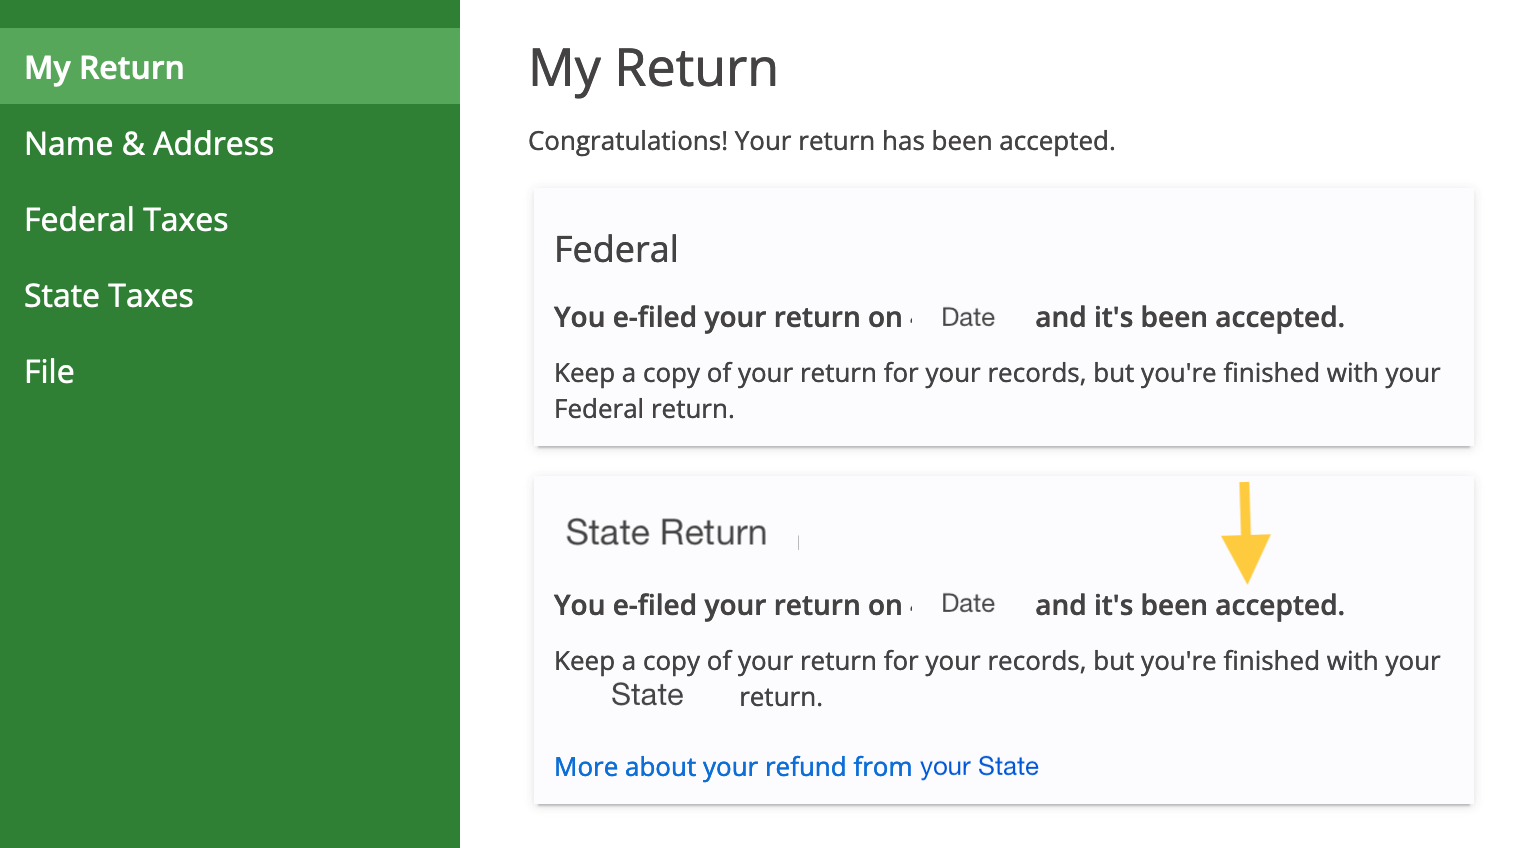 Filing Your Return